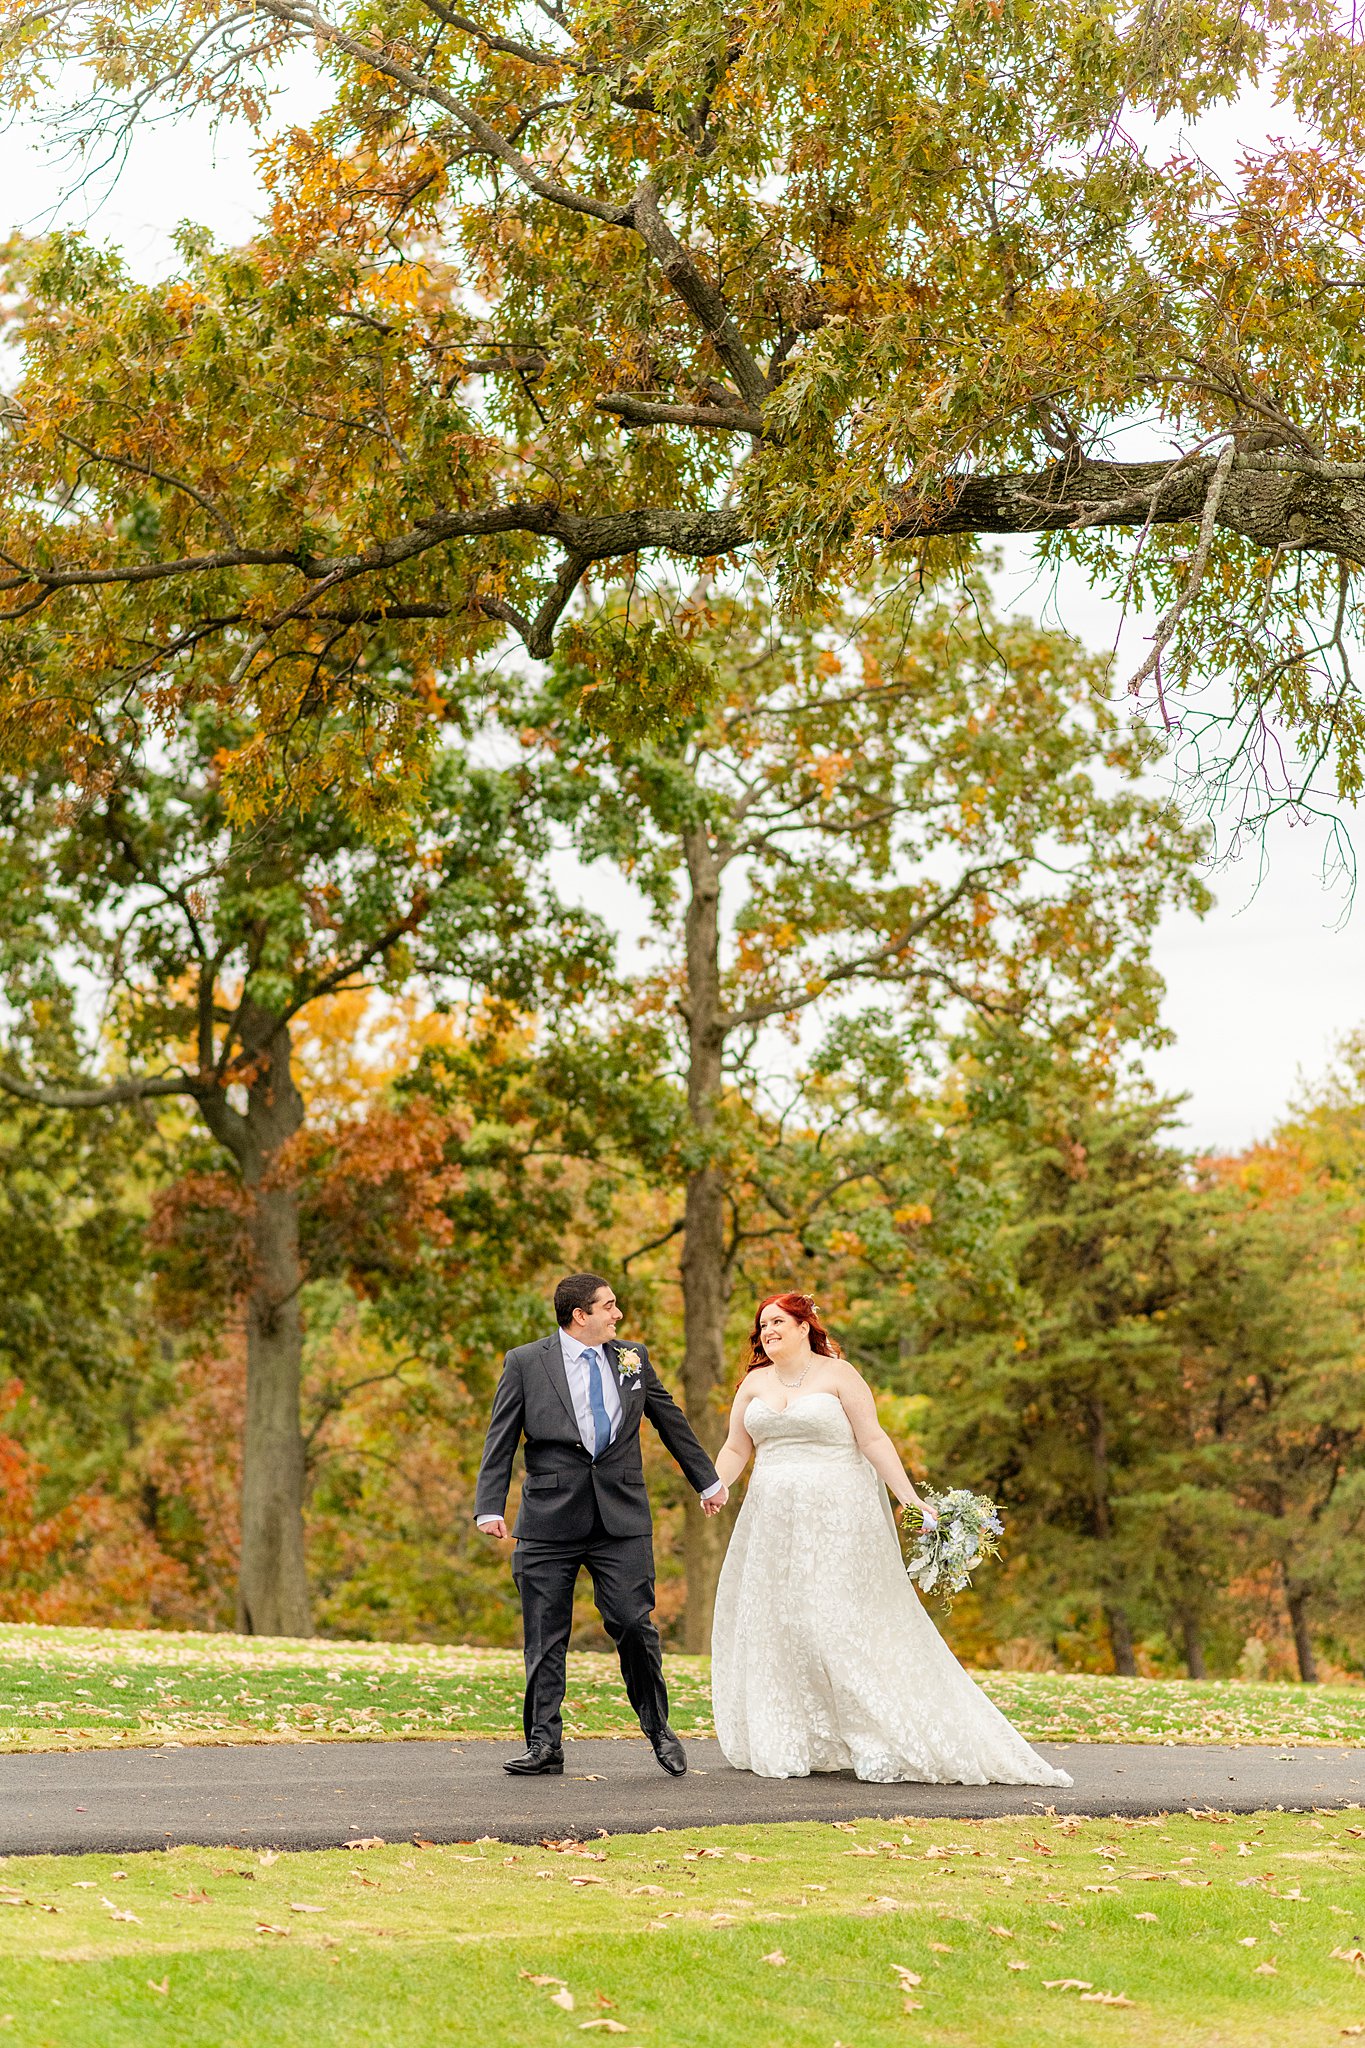 NEwlyweds walk down a paved sidewalk in a large park virginia wedding planner